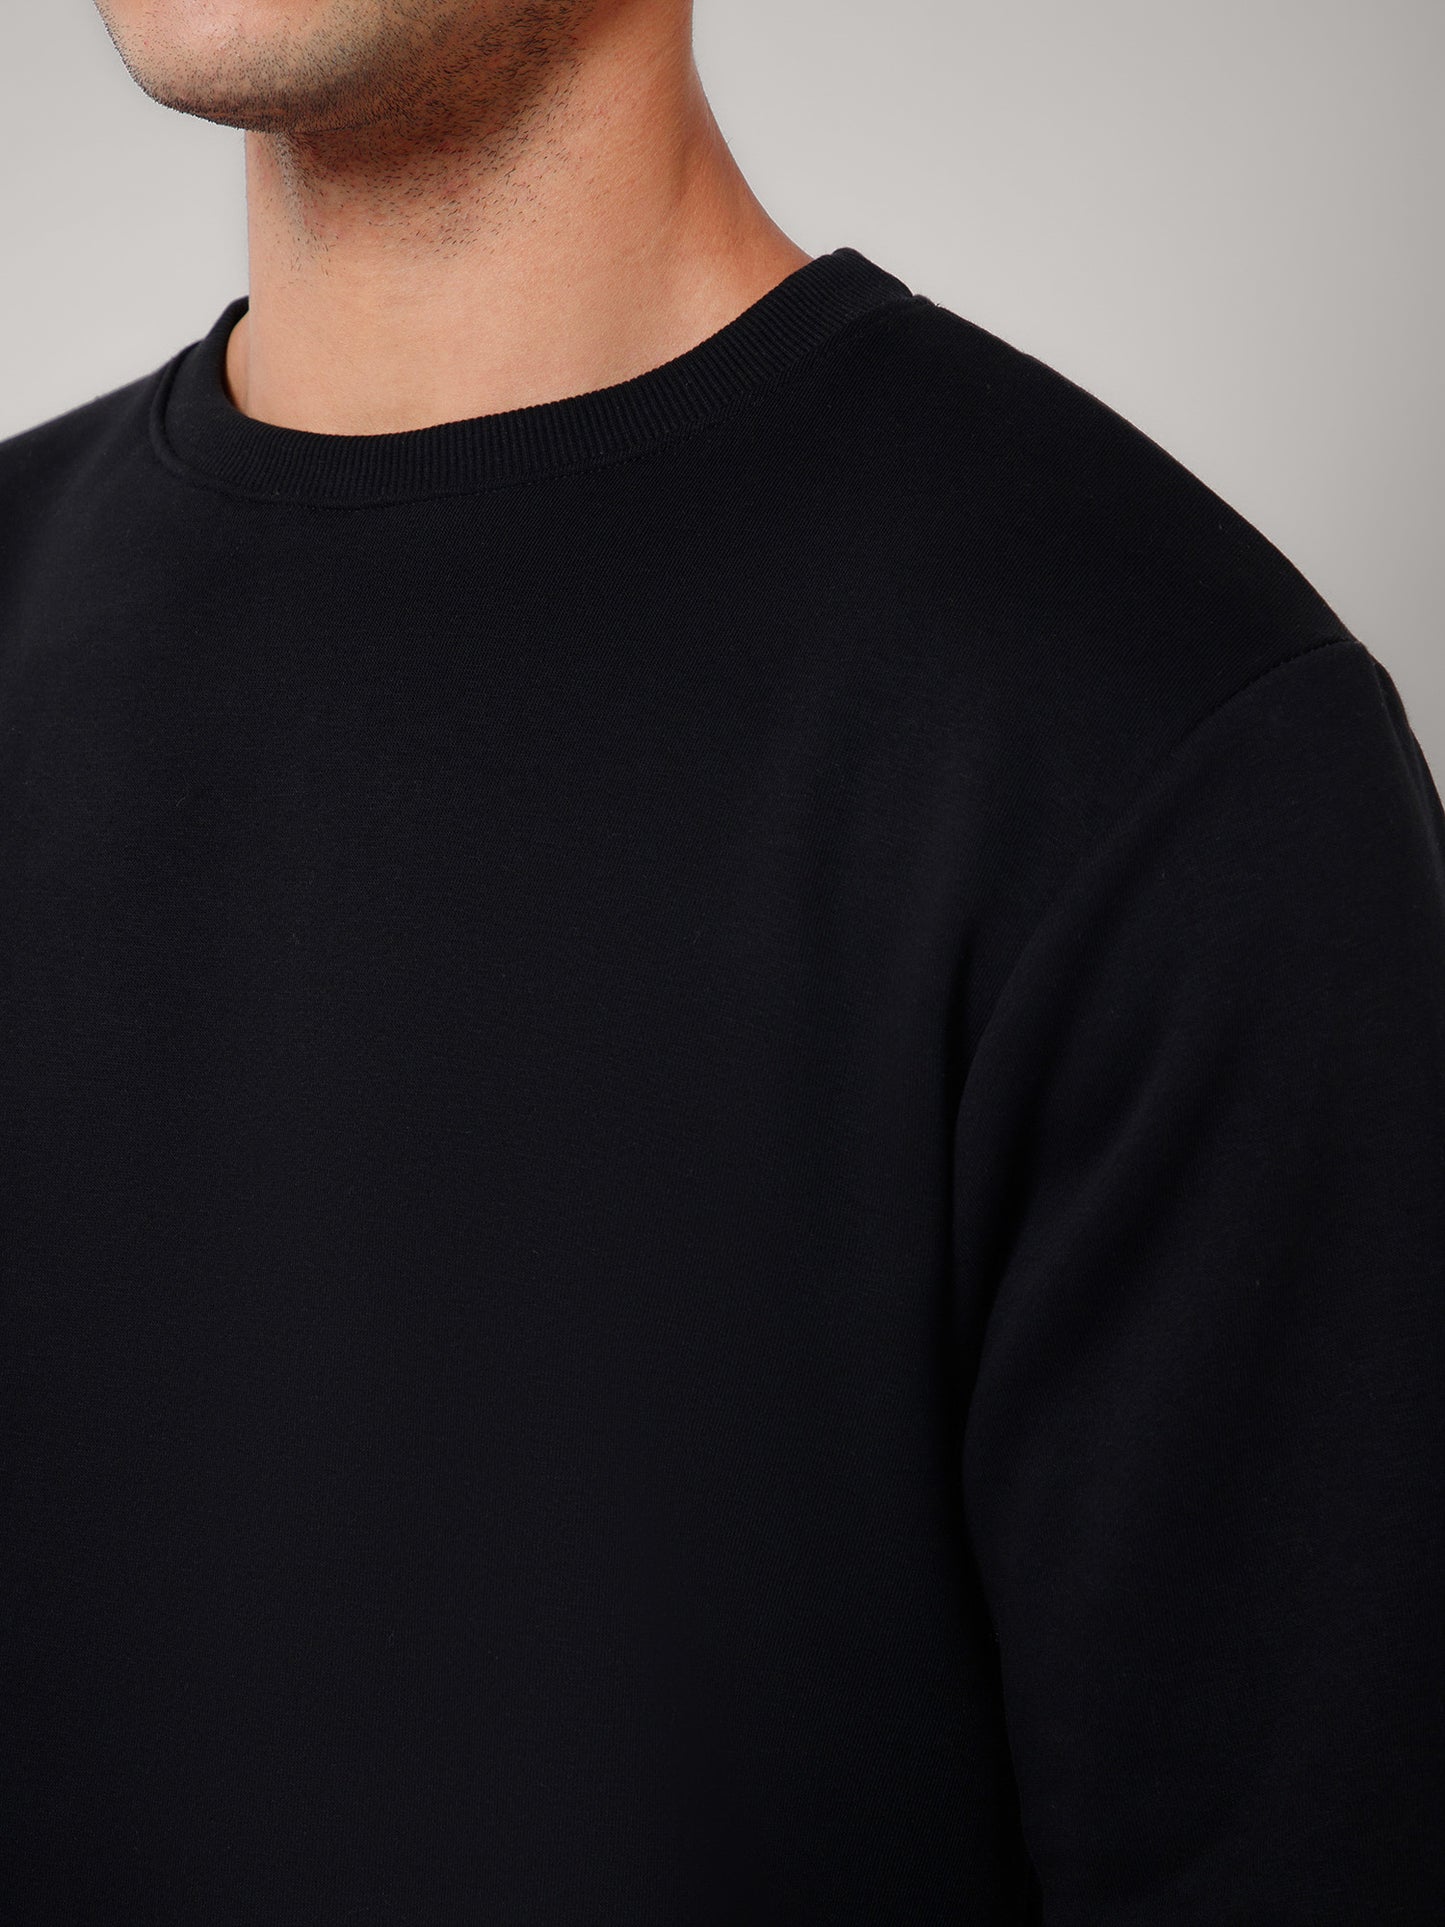 Solid Black Sweatshirt